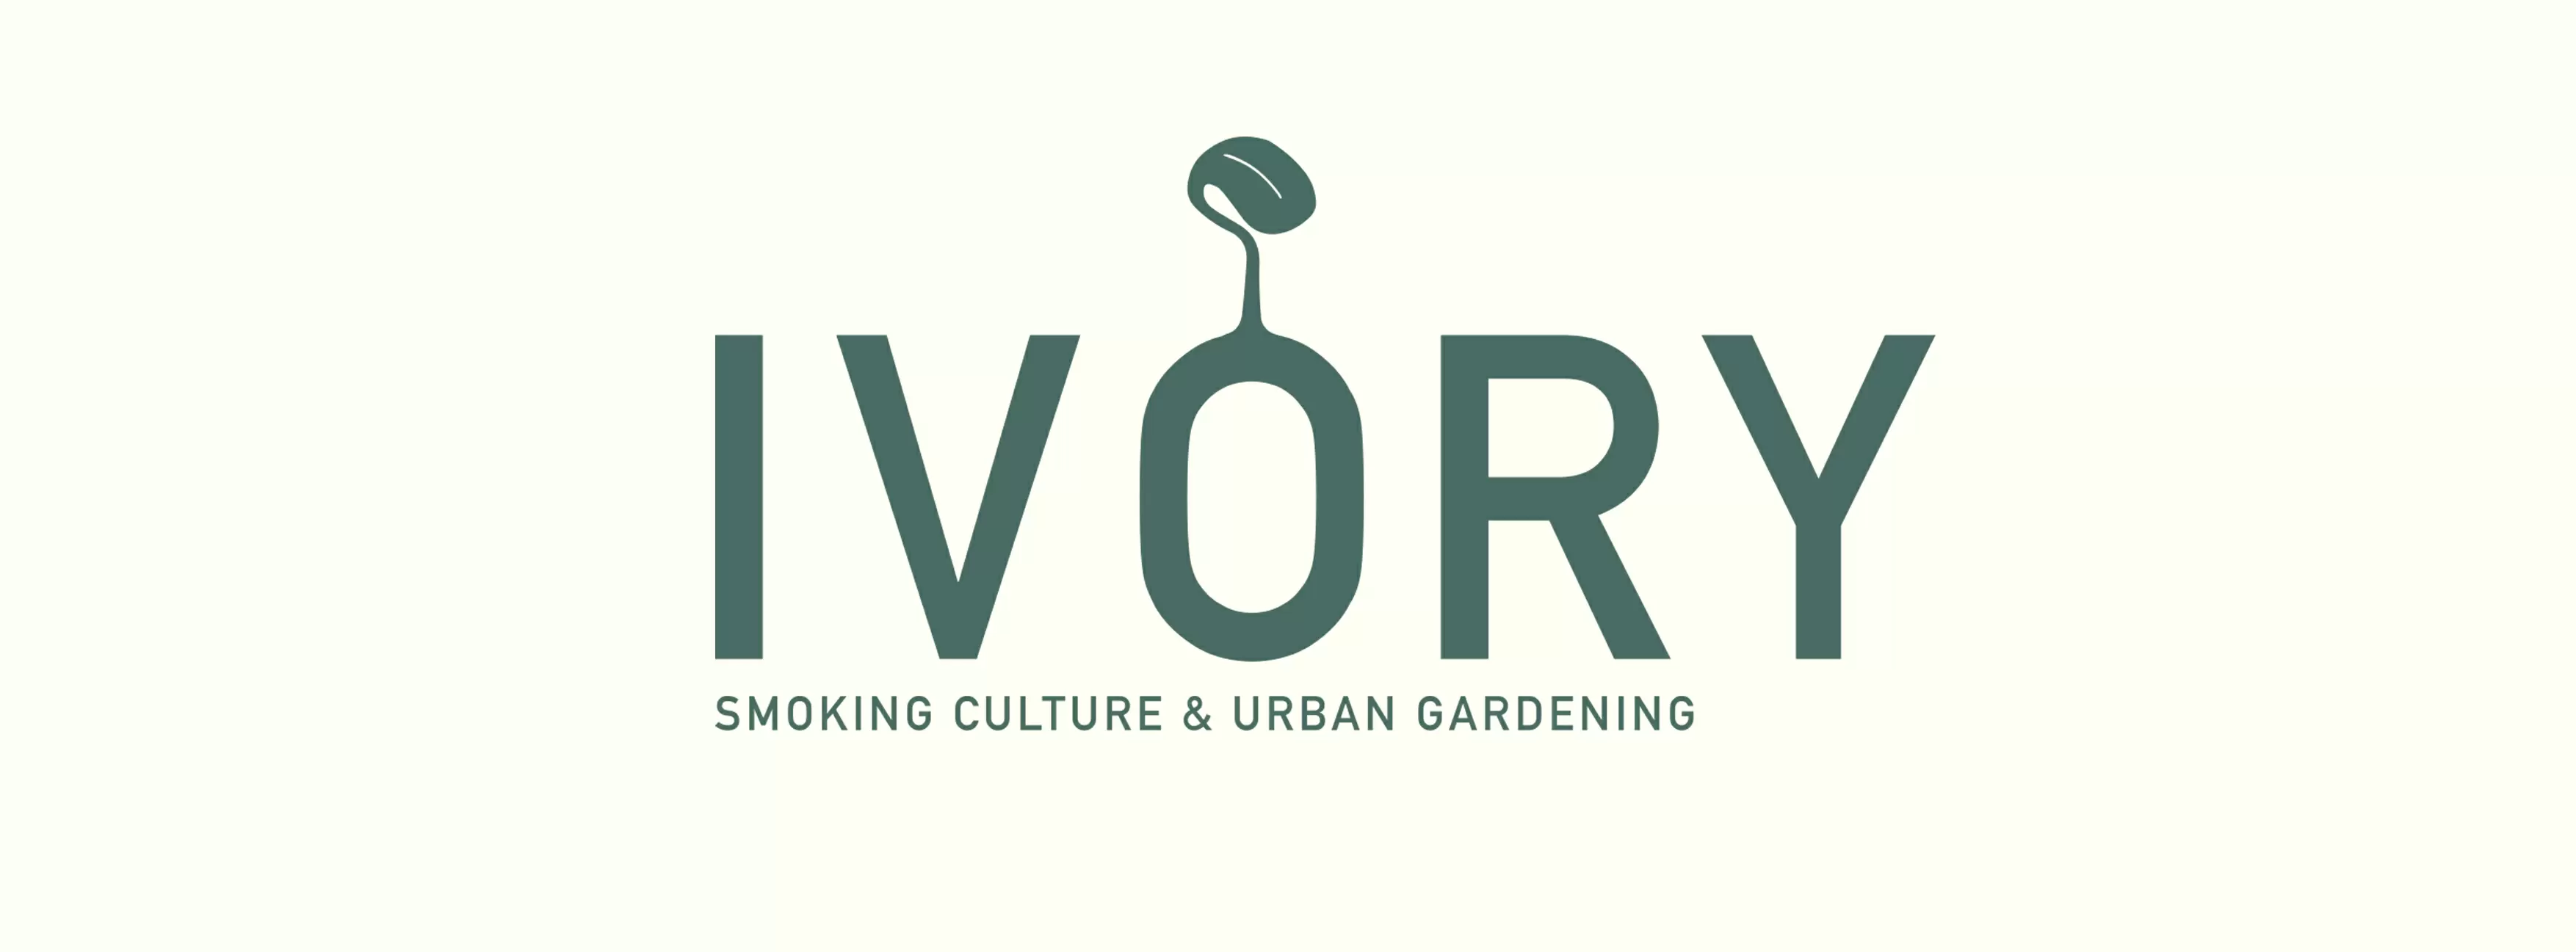 IVORY Stuttgart Smoking Culture & Urban Gardening